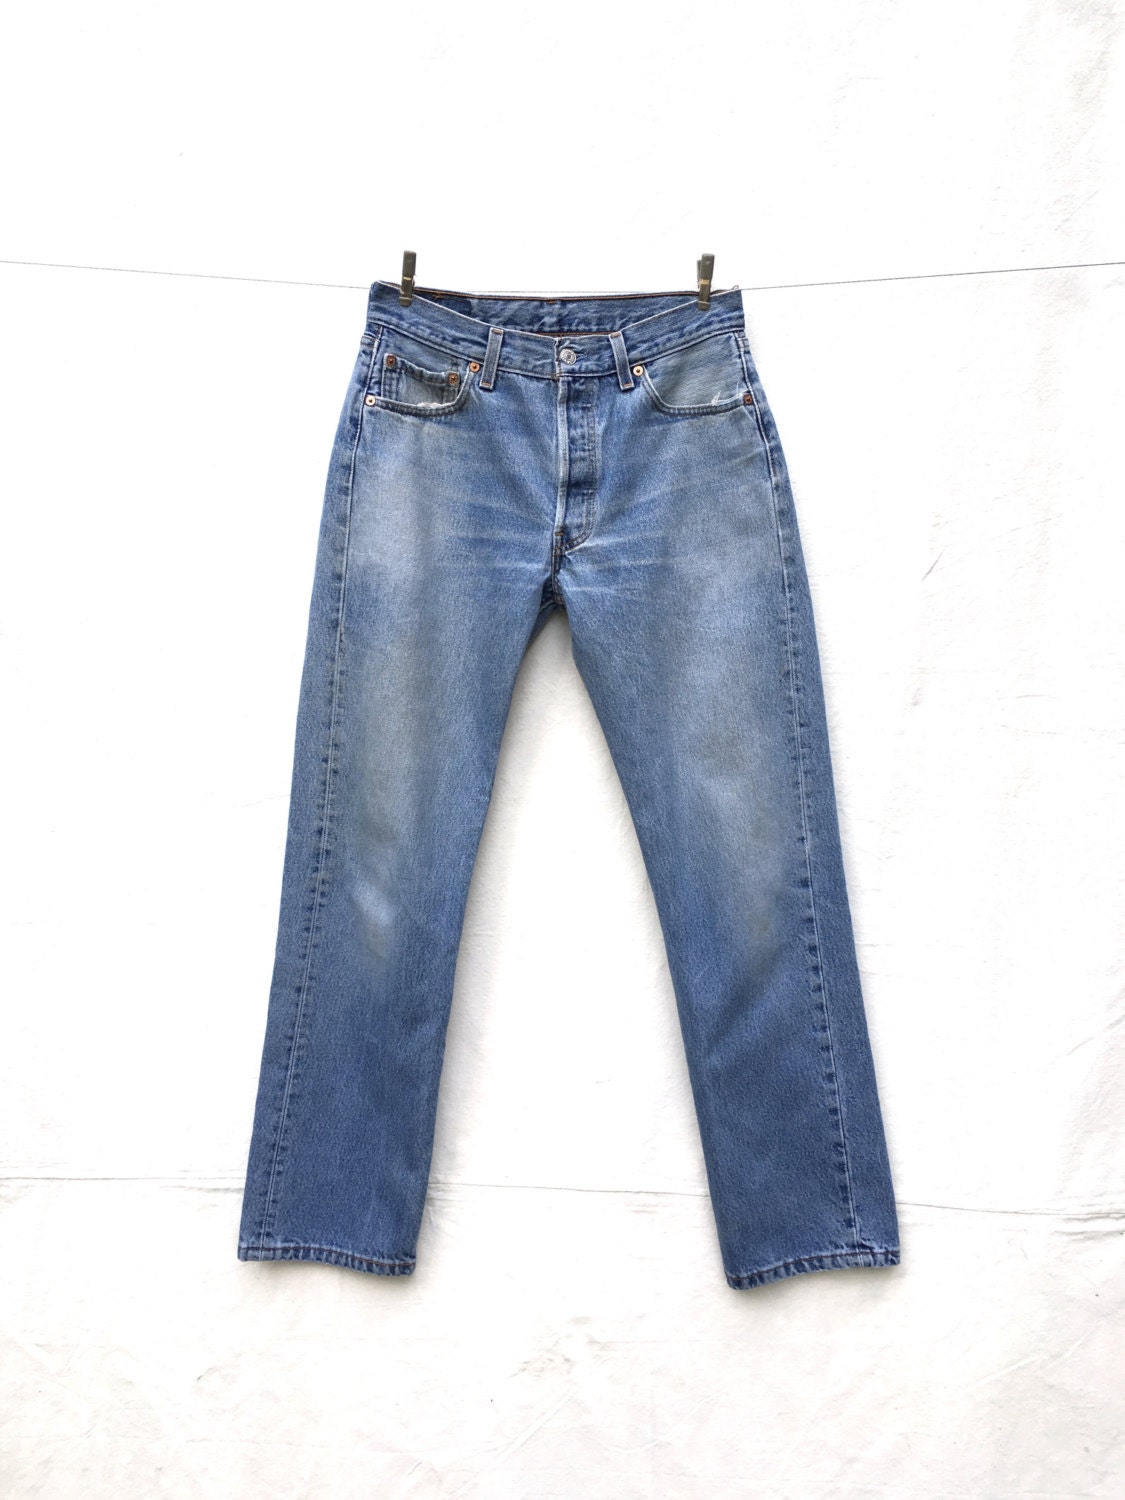 501 LEVIS 29 Waist Boyfriend Jeans Levi High Waisted Vintage